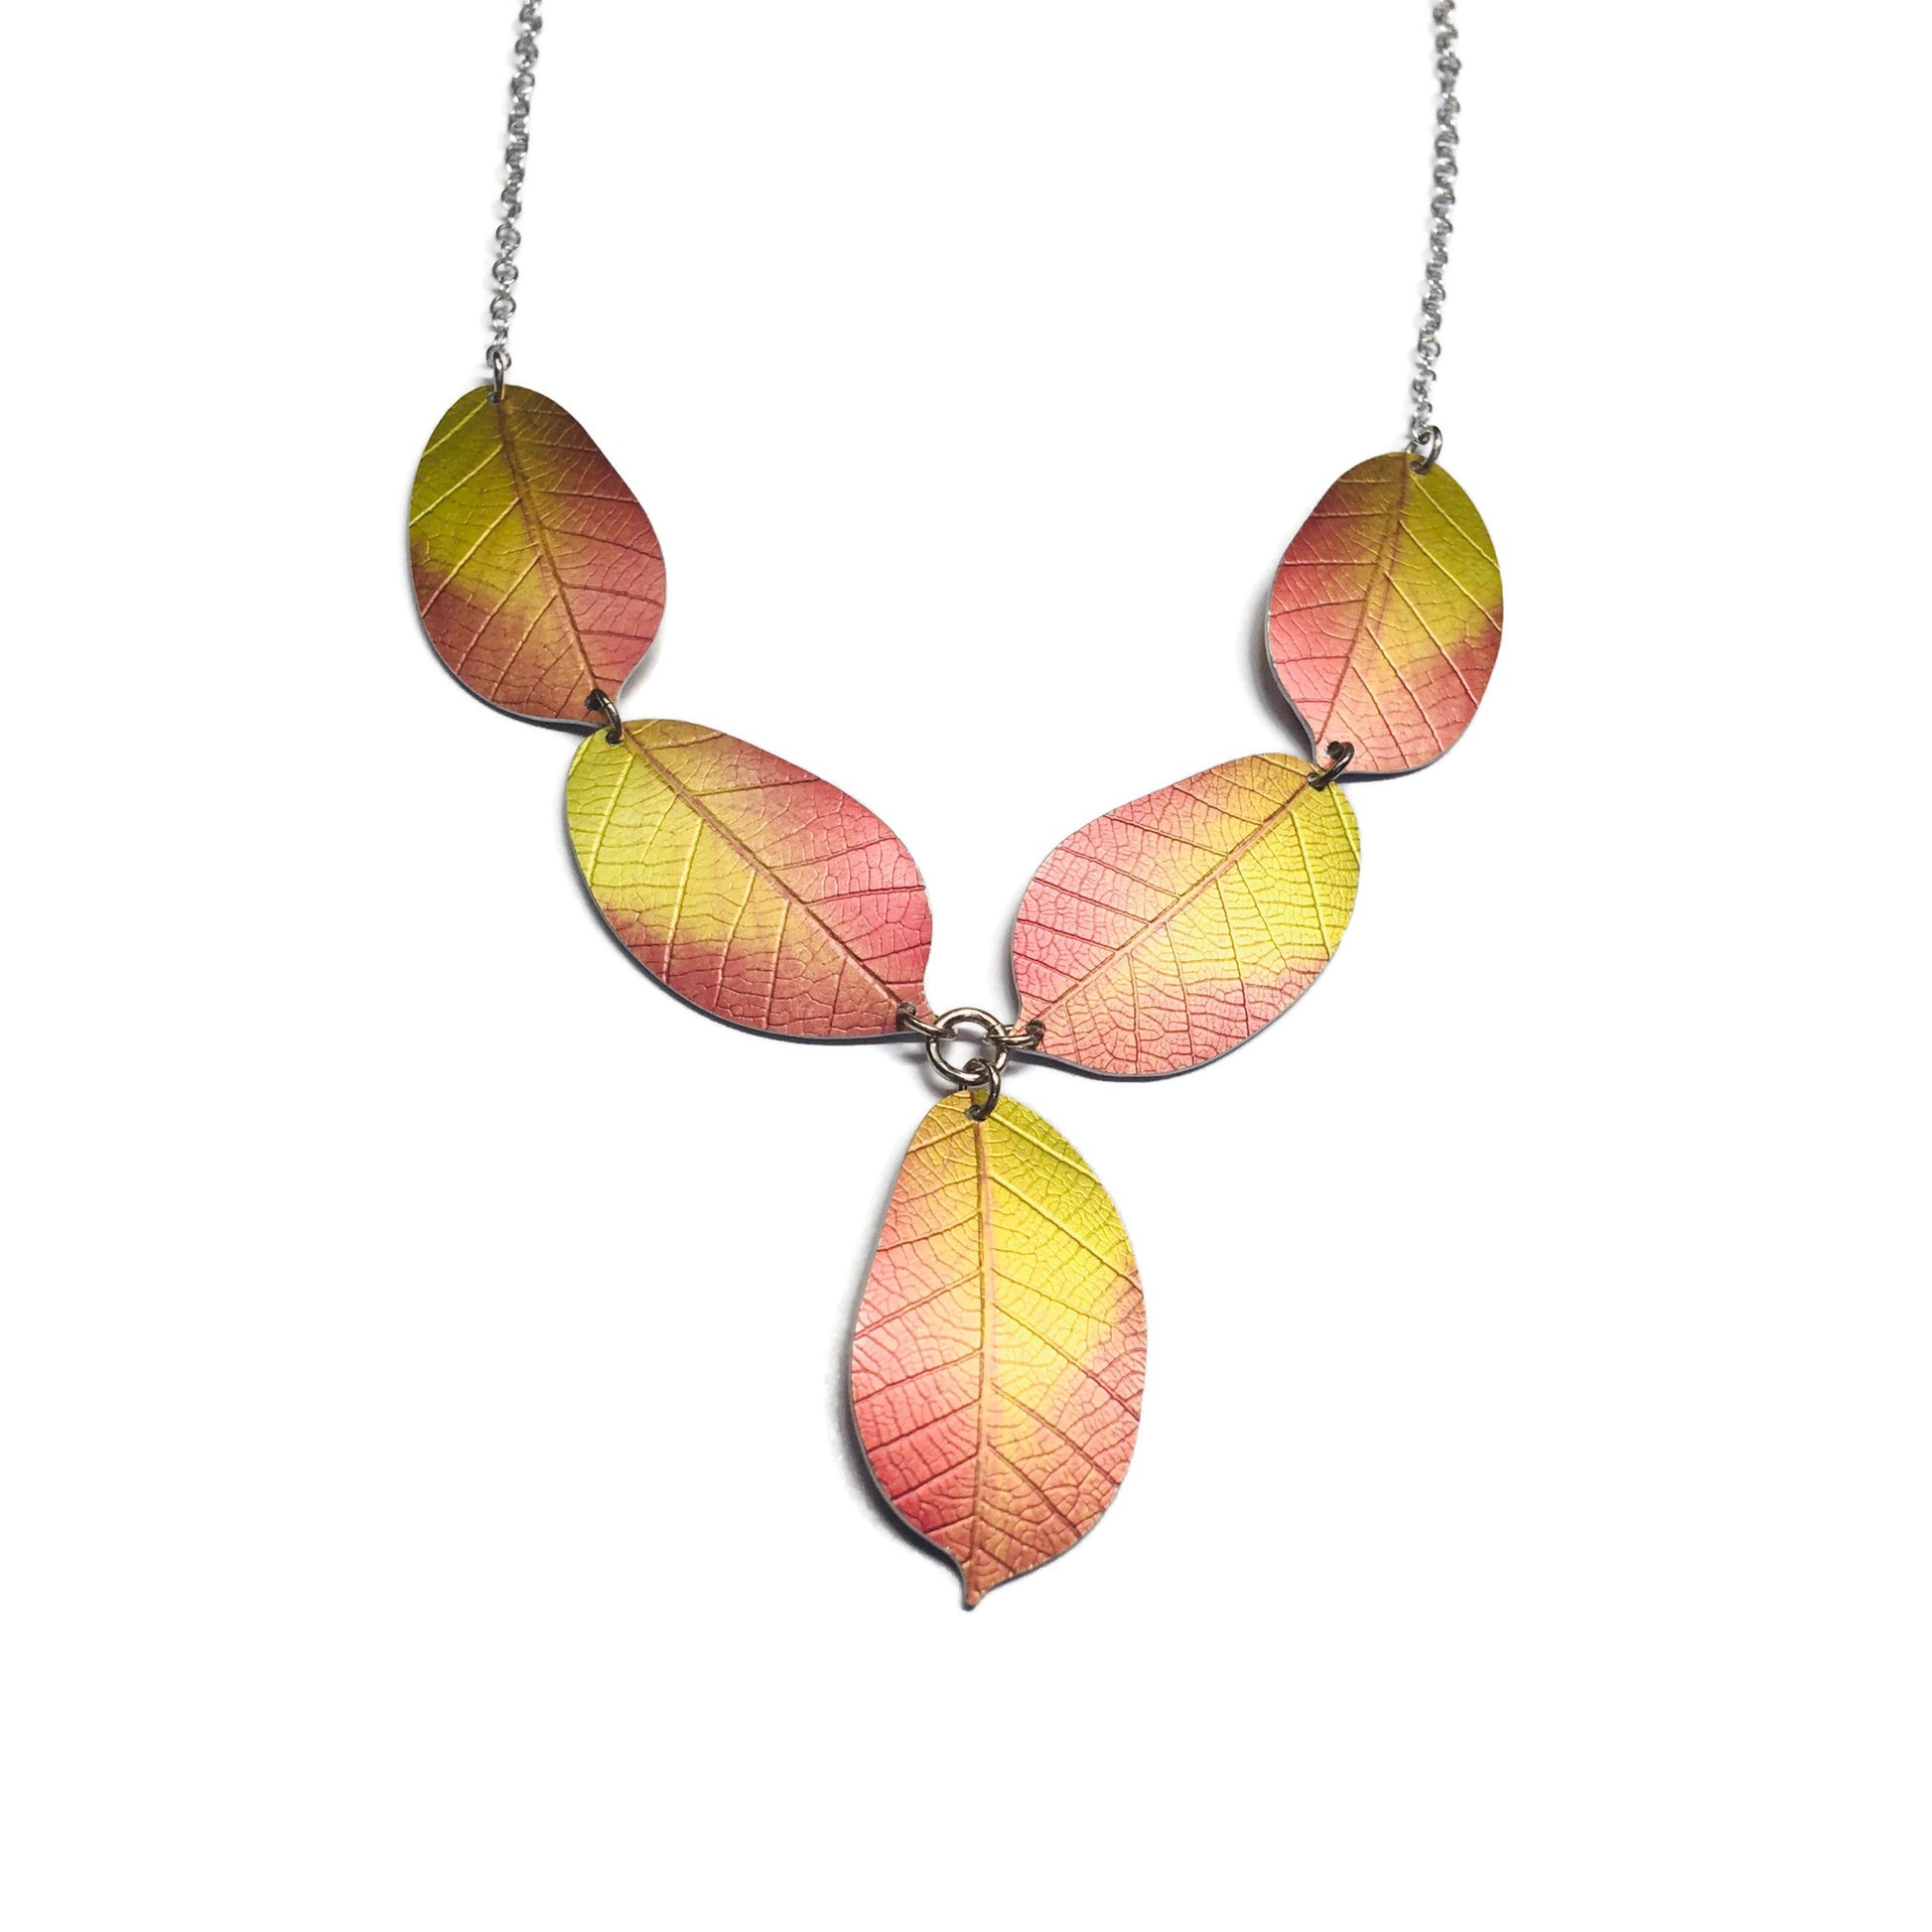 Asymmetric golden Cherry necklace by Photofinish Jewellery